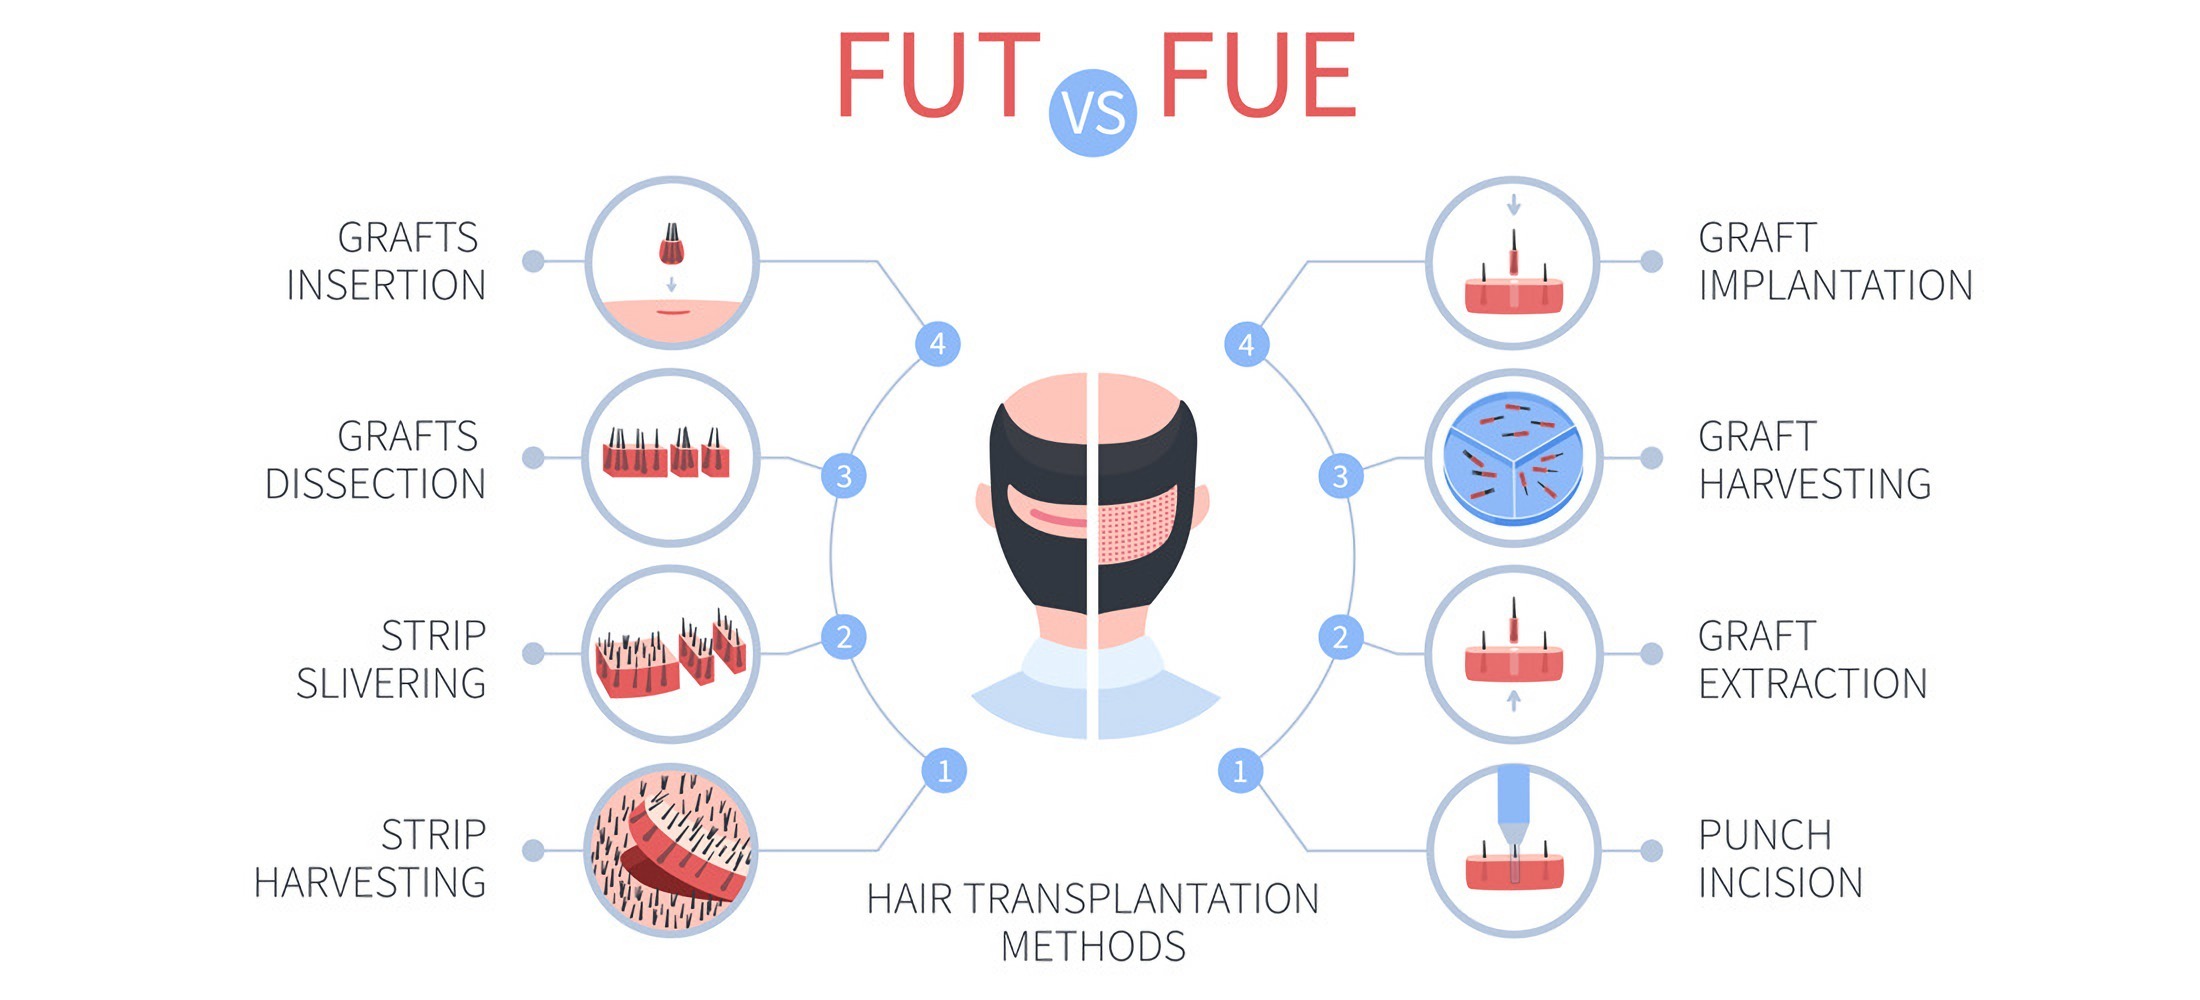 Methods of hair transplantation